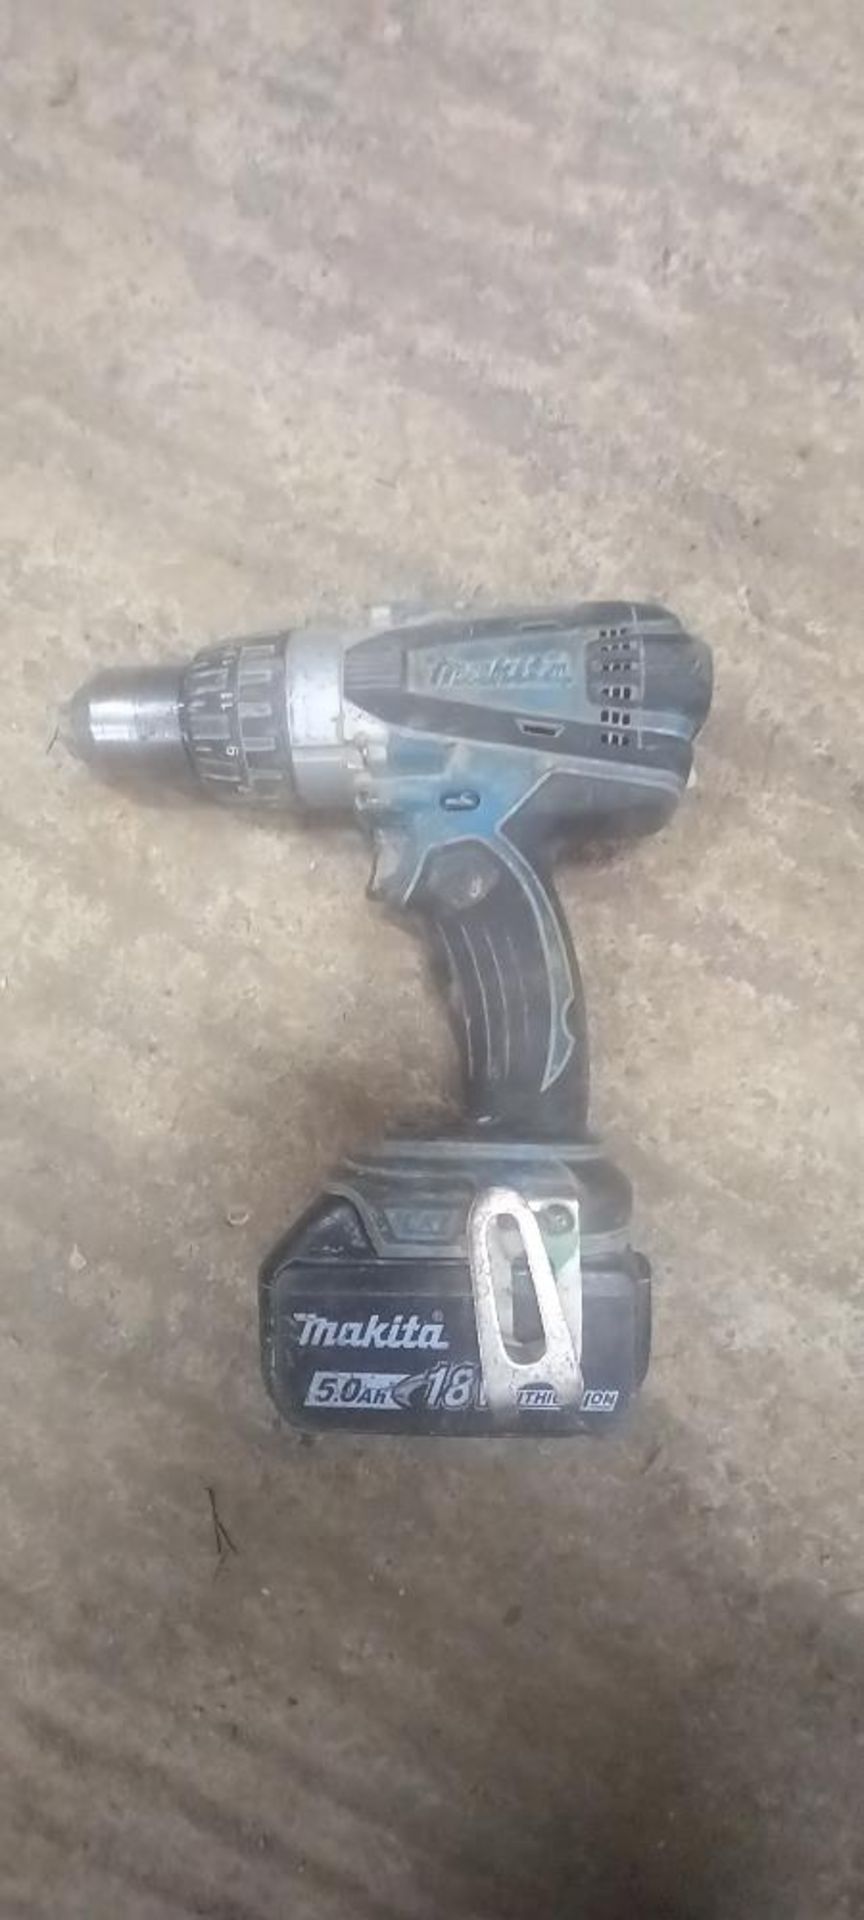 Makita DLX2145TJ 18v Cordless Drill Kit - Image 2 of 5